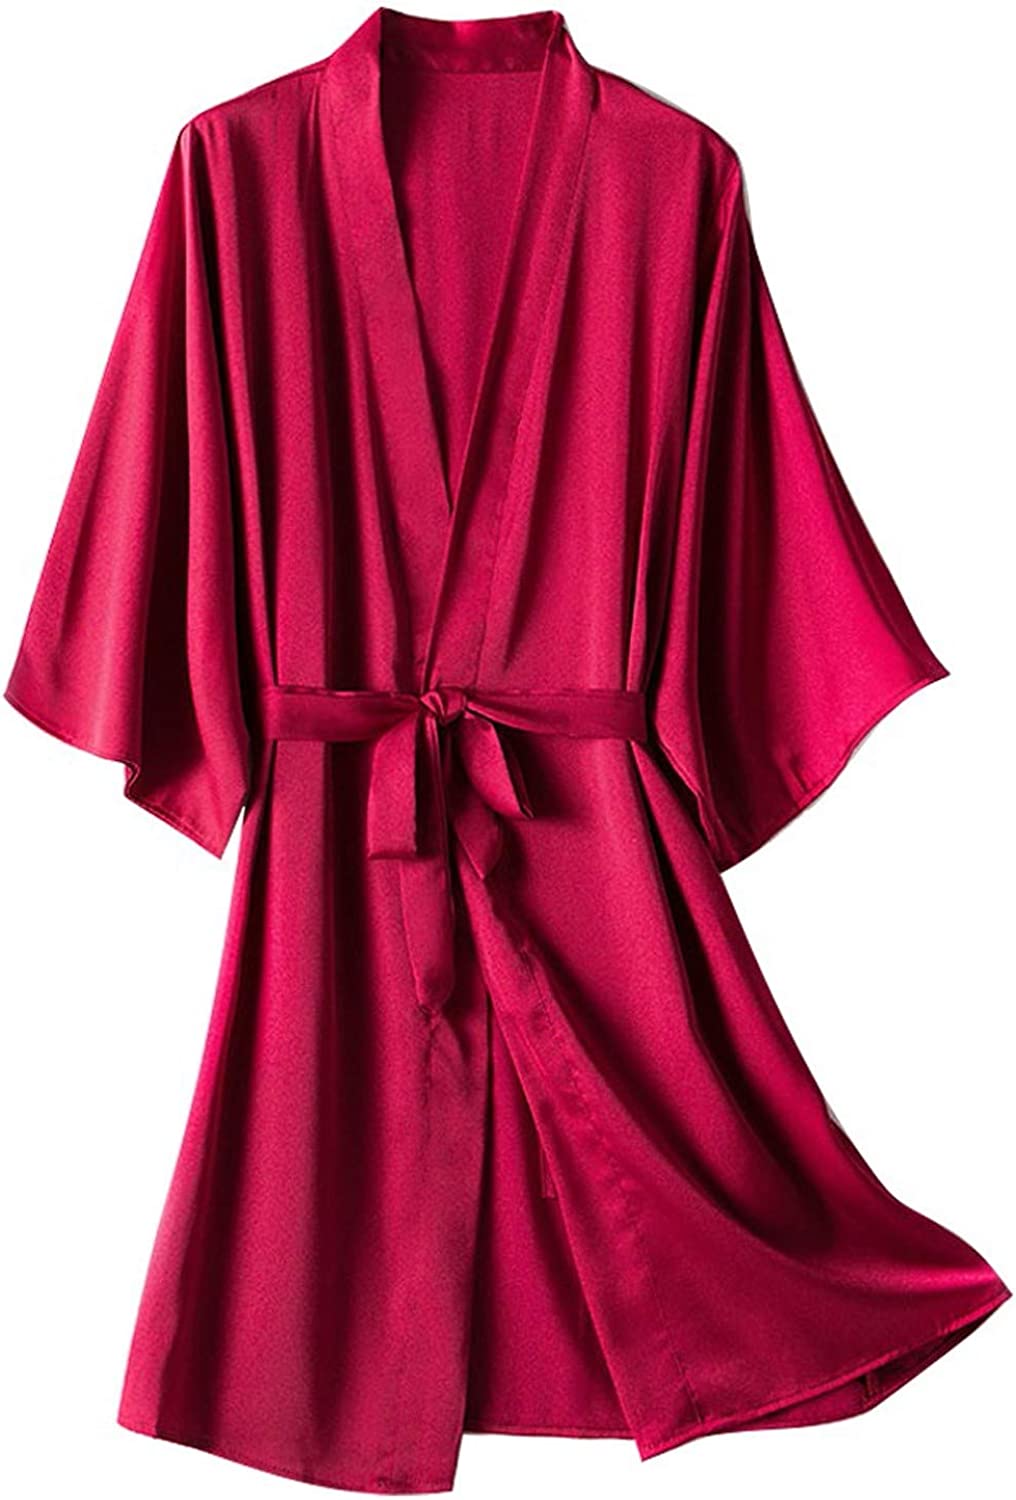 Womens Satin Kimono Robes Silk Short Bridesmaid Robe Lingerie Dressing Gown Bathrobe Nightgown Sleepwear